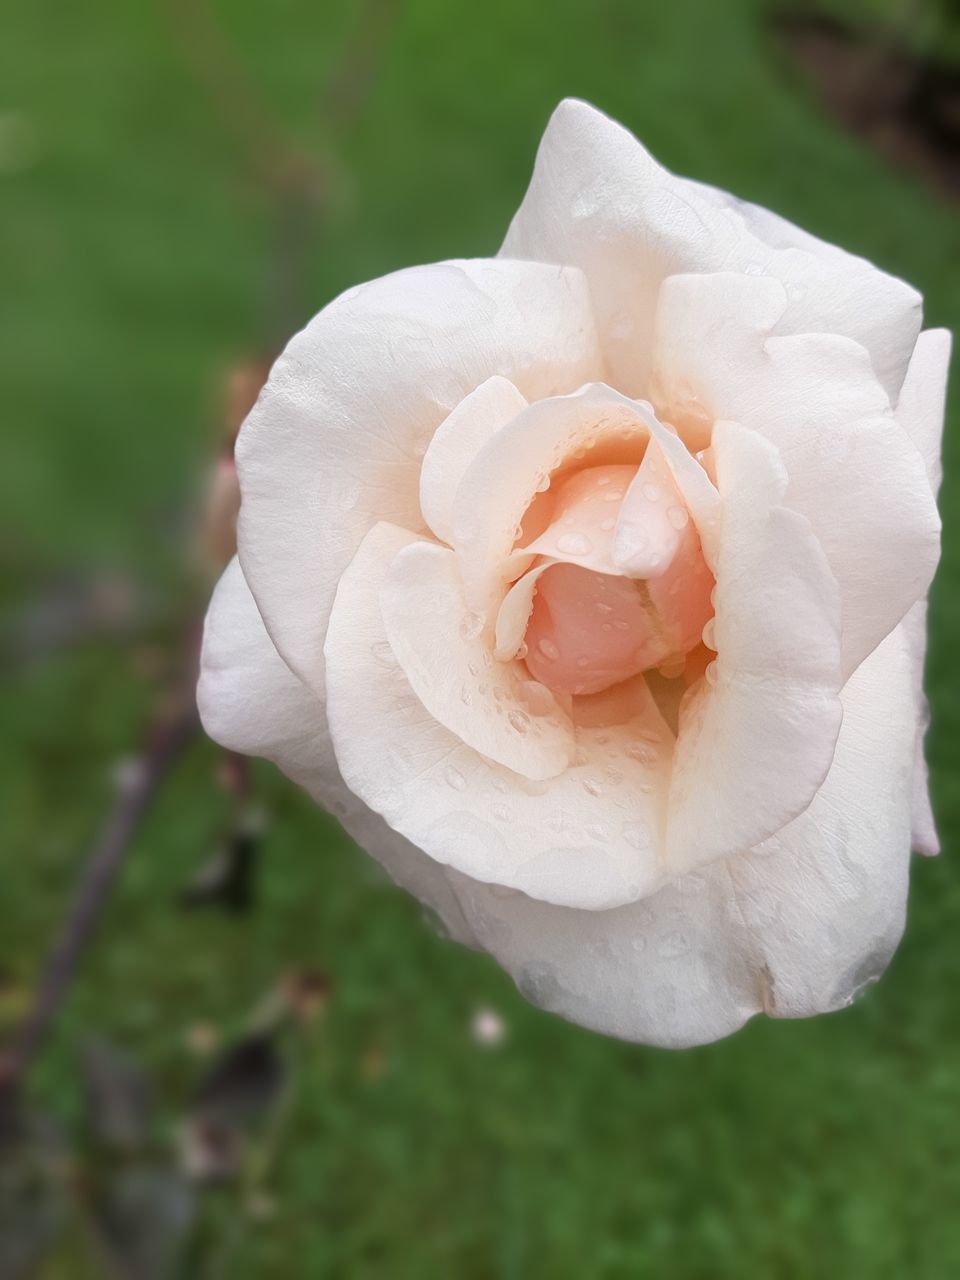 CLOSE-UP OF WHITE ROSE ON LEAF